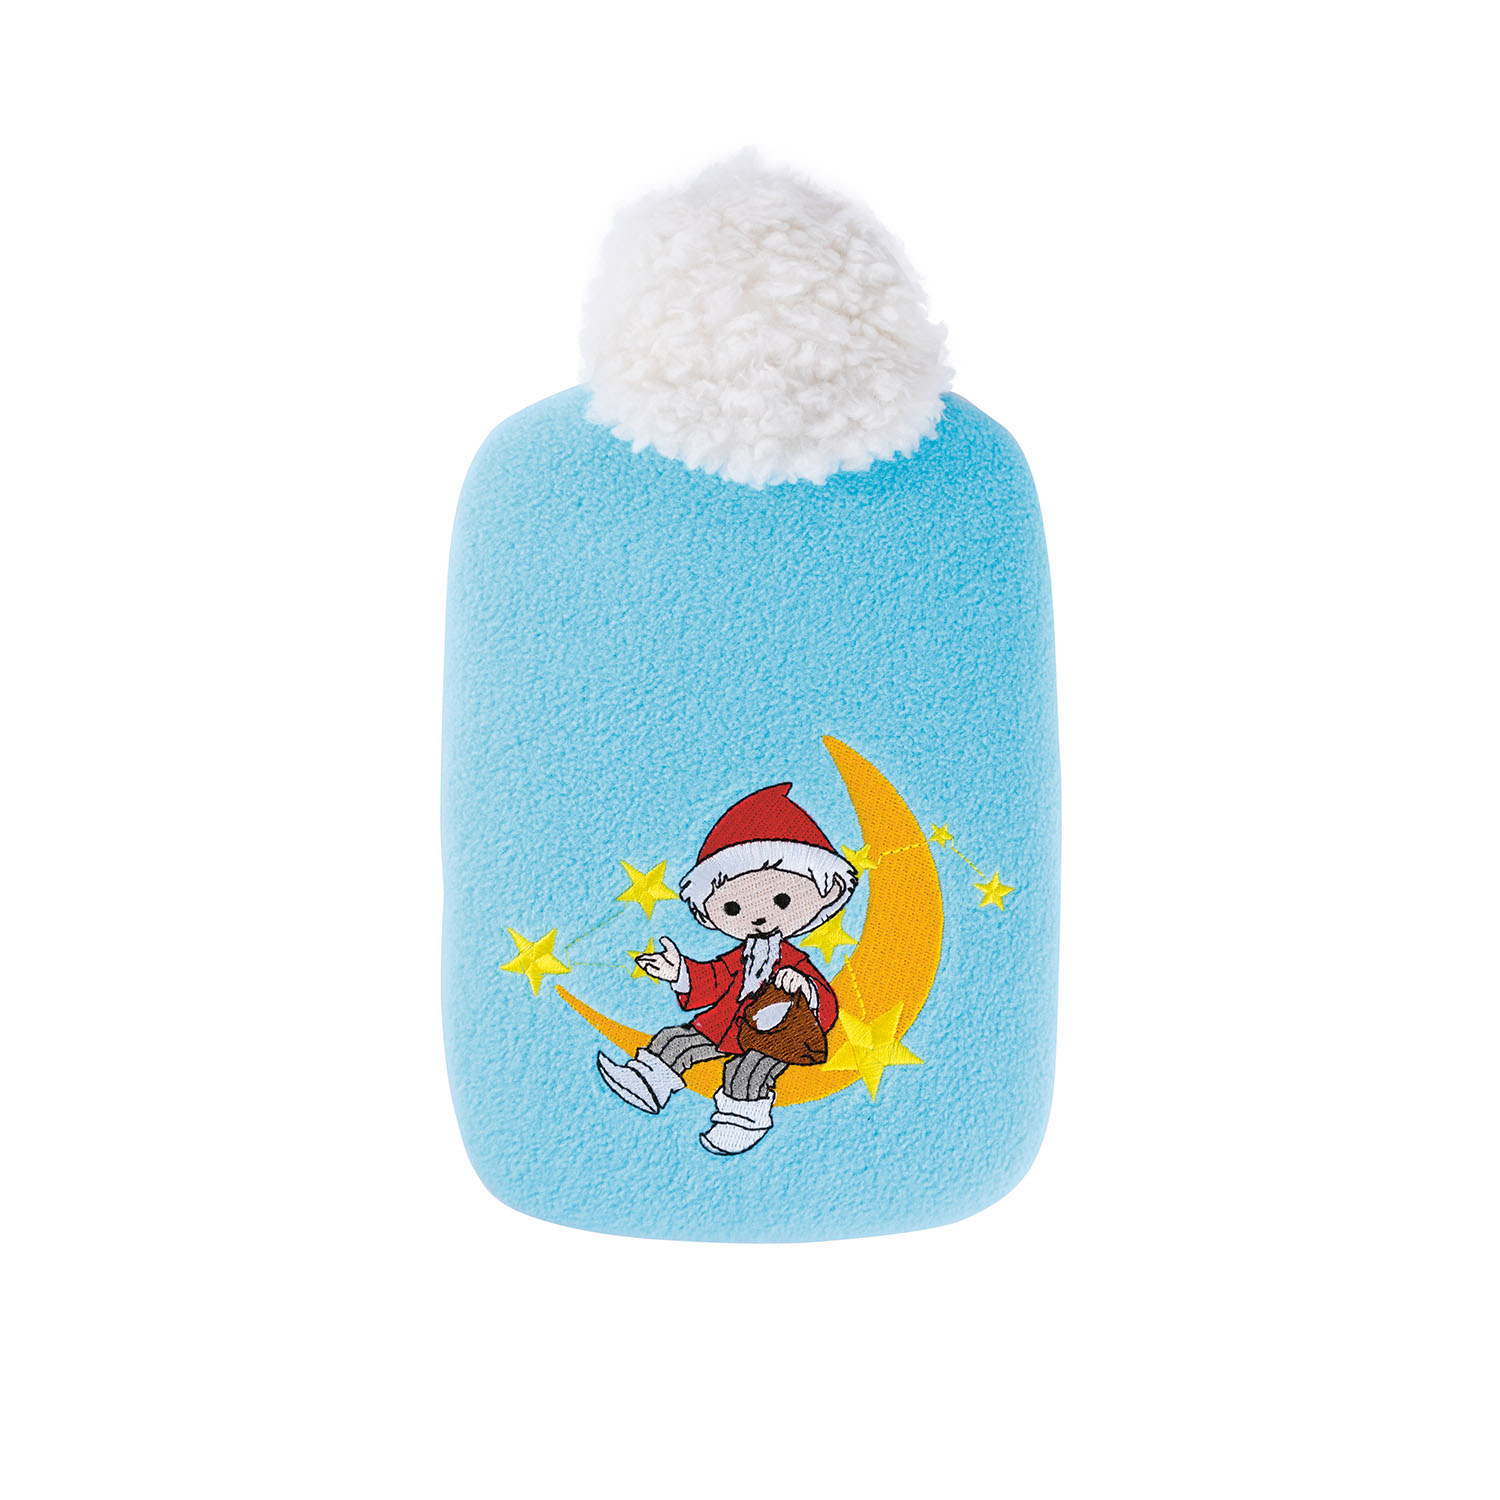 Kinder Öko-Wärmflasche 0,8 l mit Soft-Fleecebezug "Sandmännchen Mond" hellblau